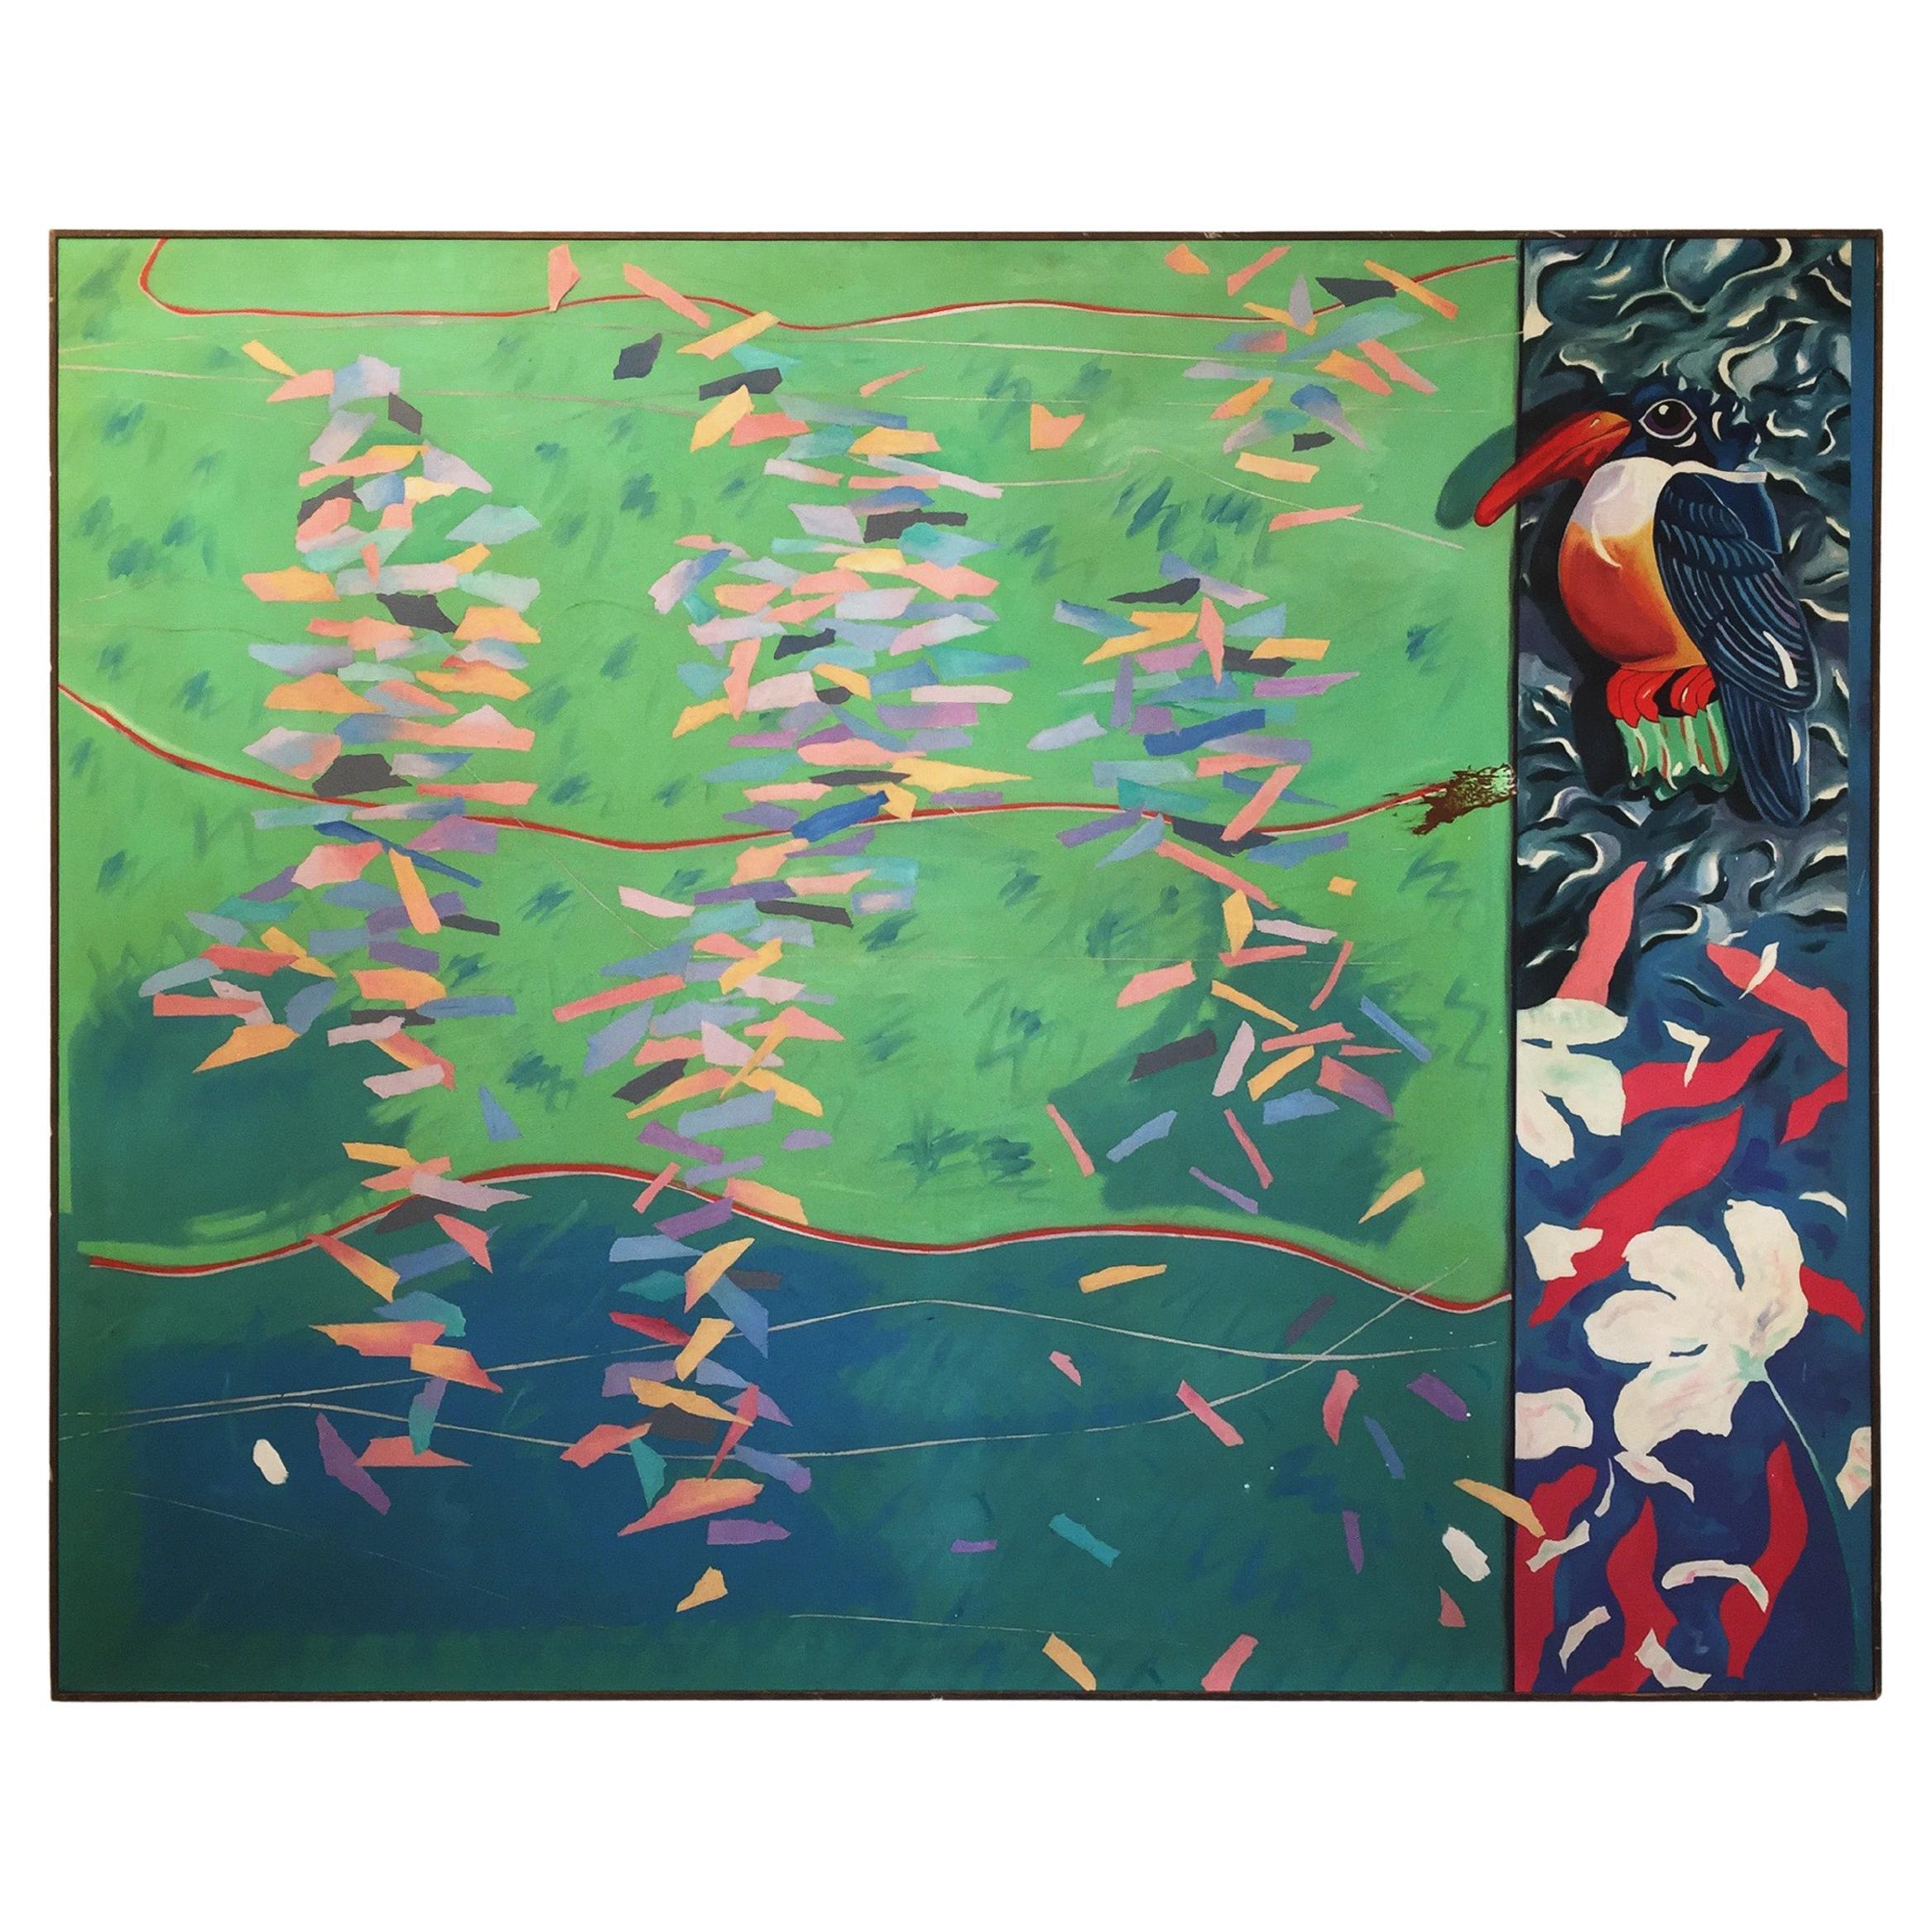 Richard Frank 'Kingfisher's Kotillion' Painting Oil On Canvas 1980s Art Painting For Sale